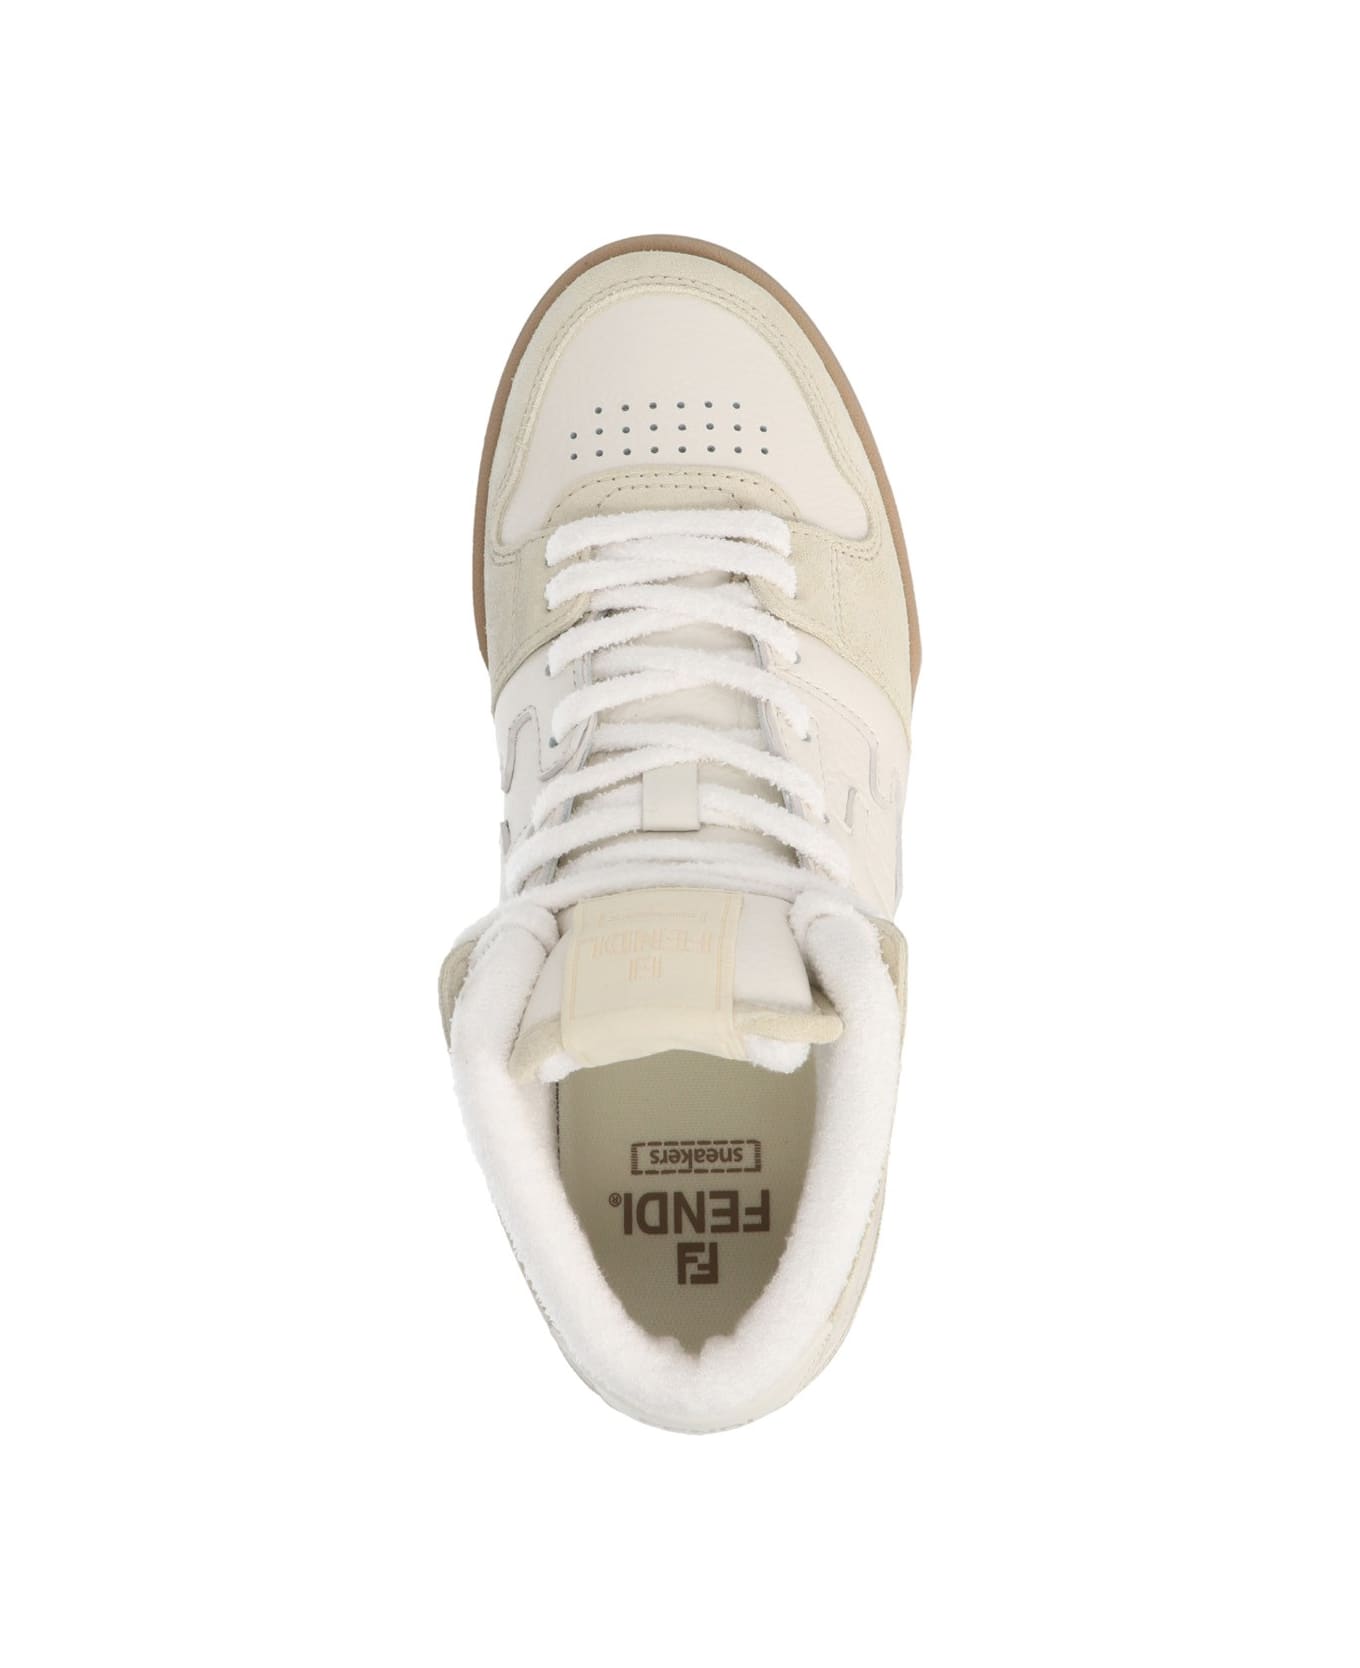 Fendi Match Sneakers - Ice+bianco fendi+ice